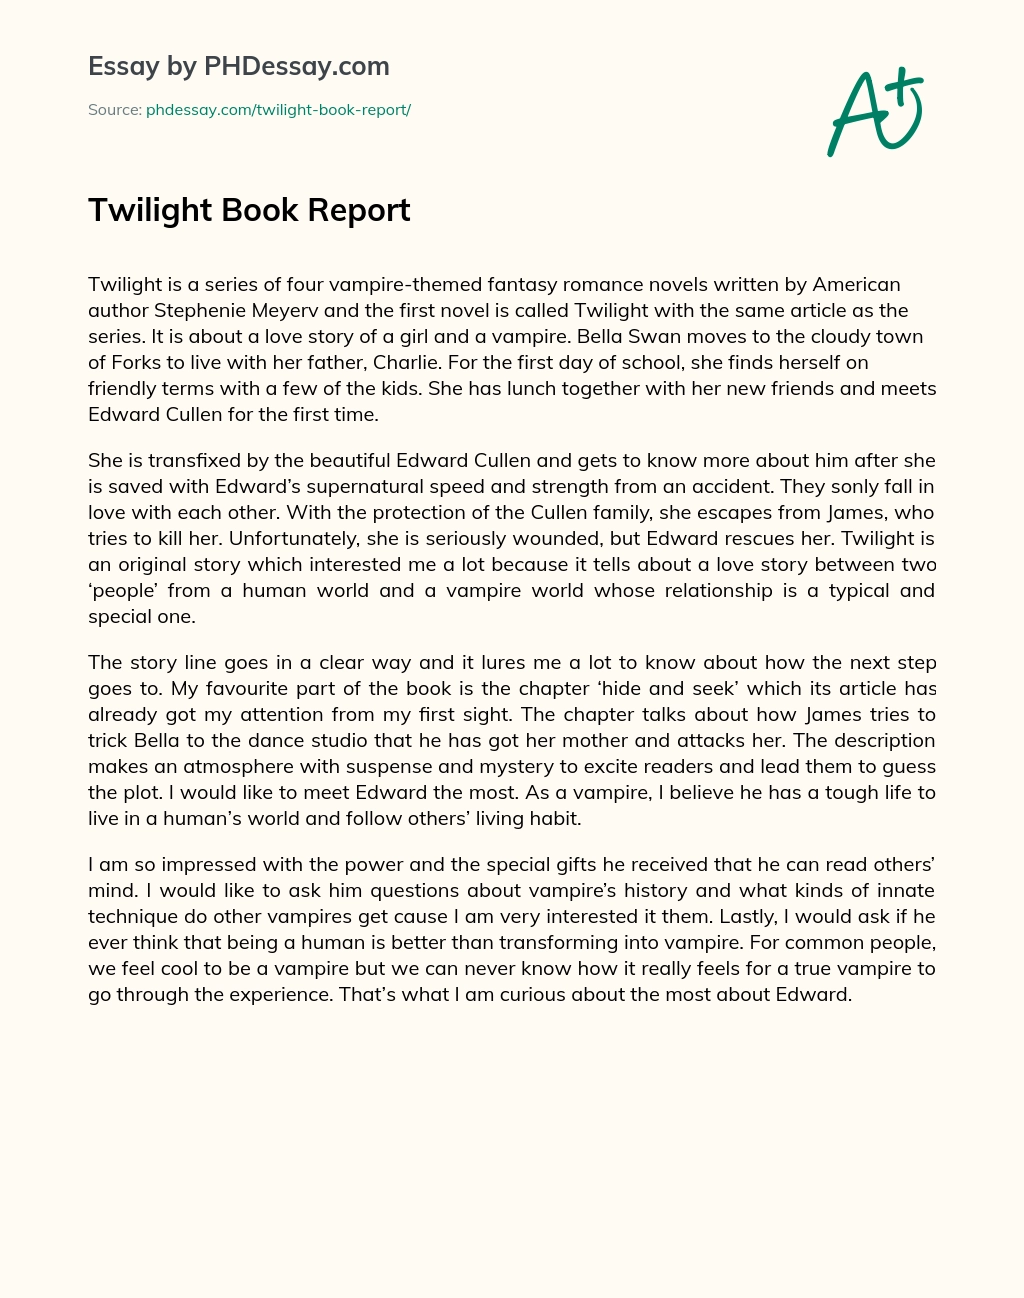 Twilight Book Report essay